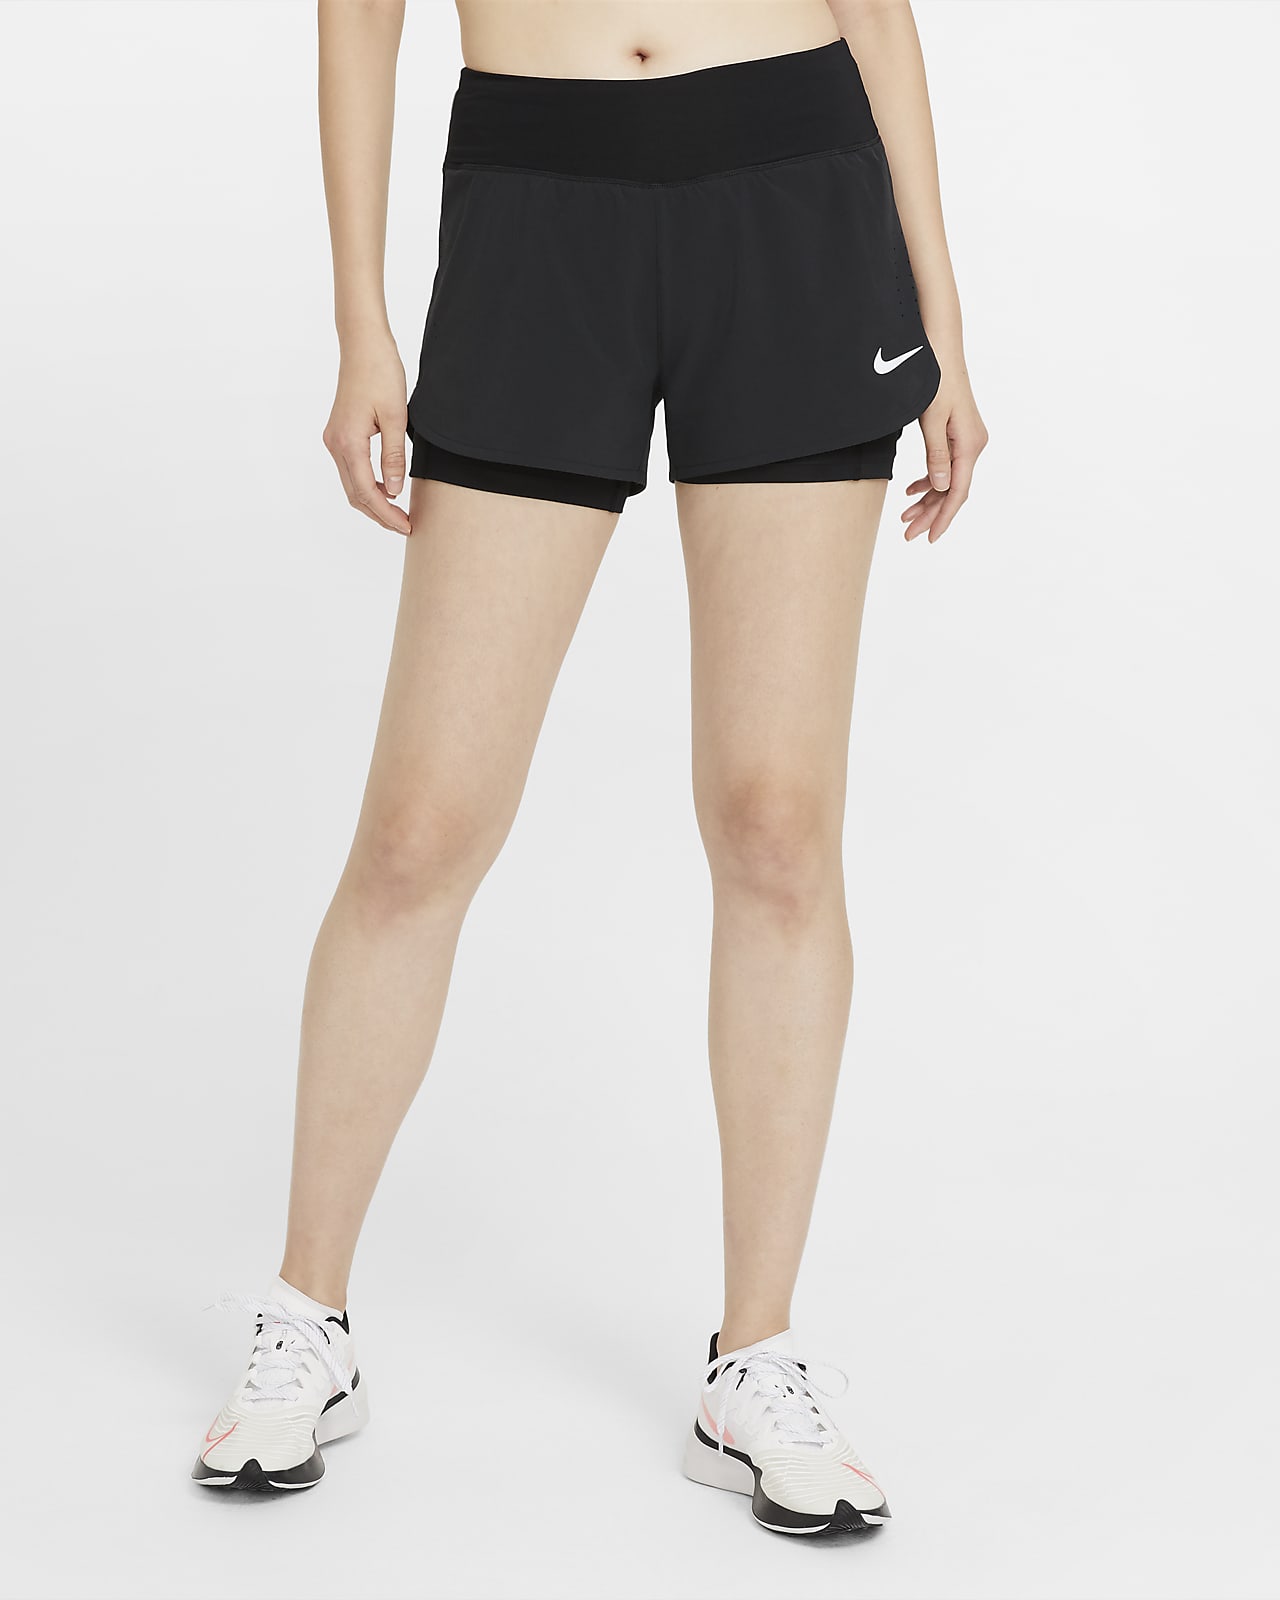 Nike Eclipse 2-in-1 hardloopshorts voor dames